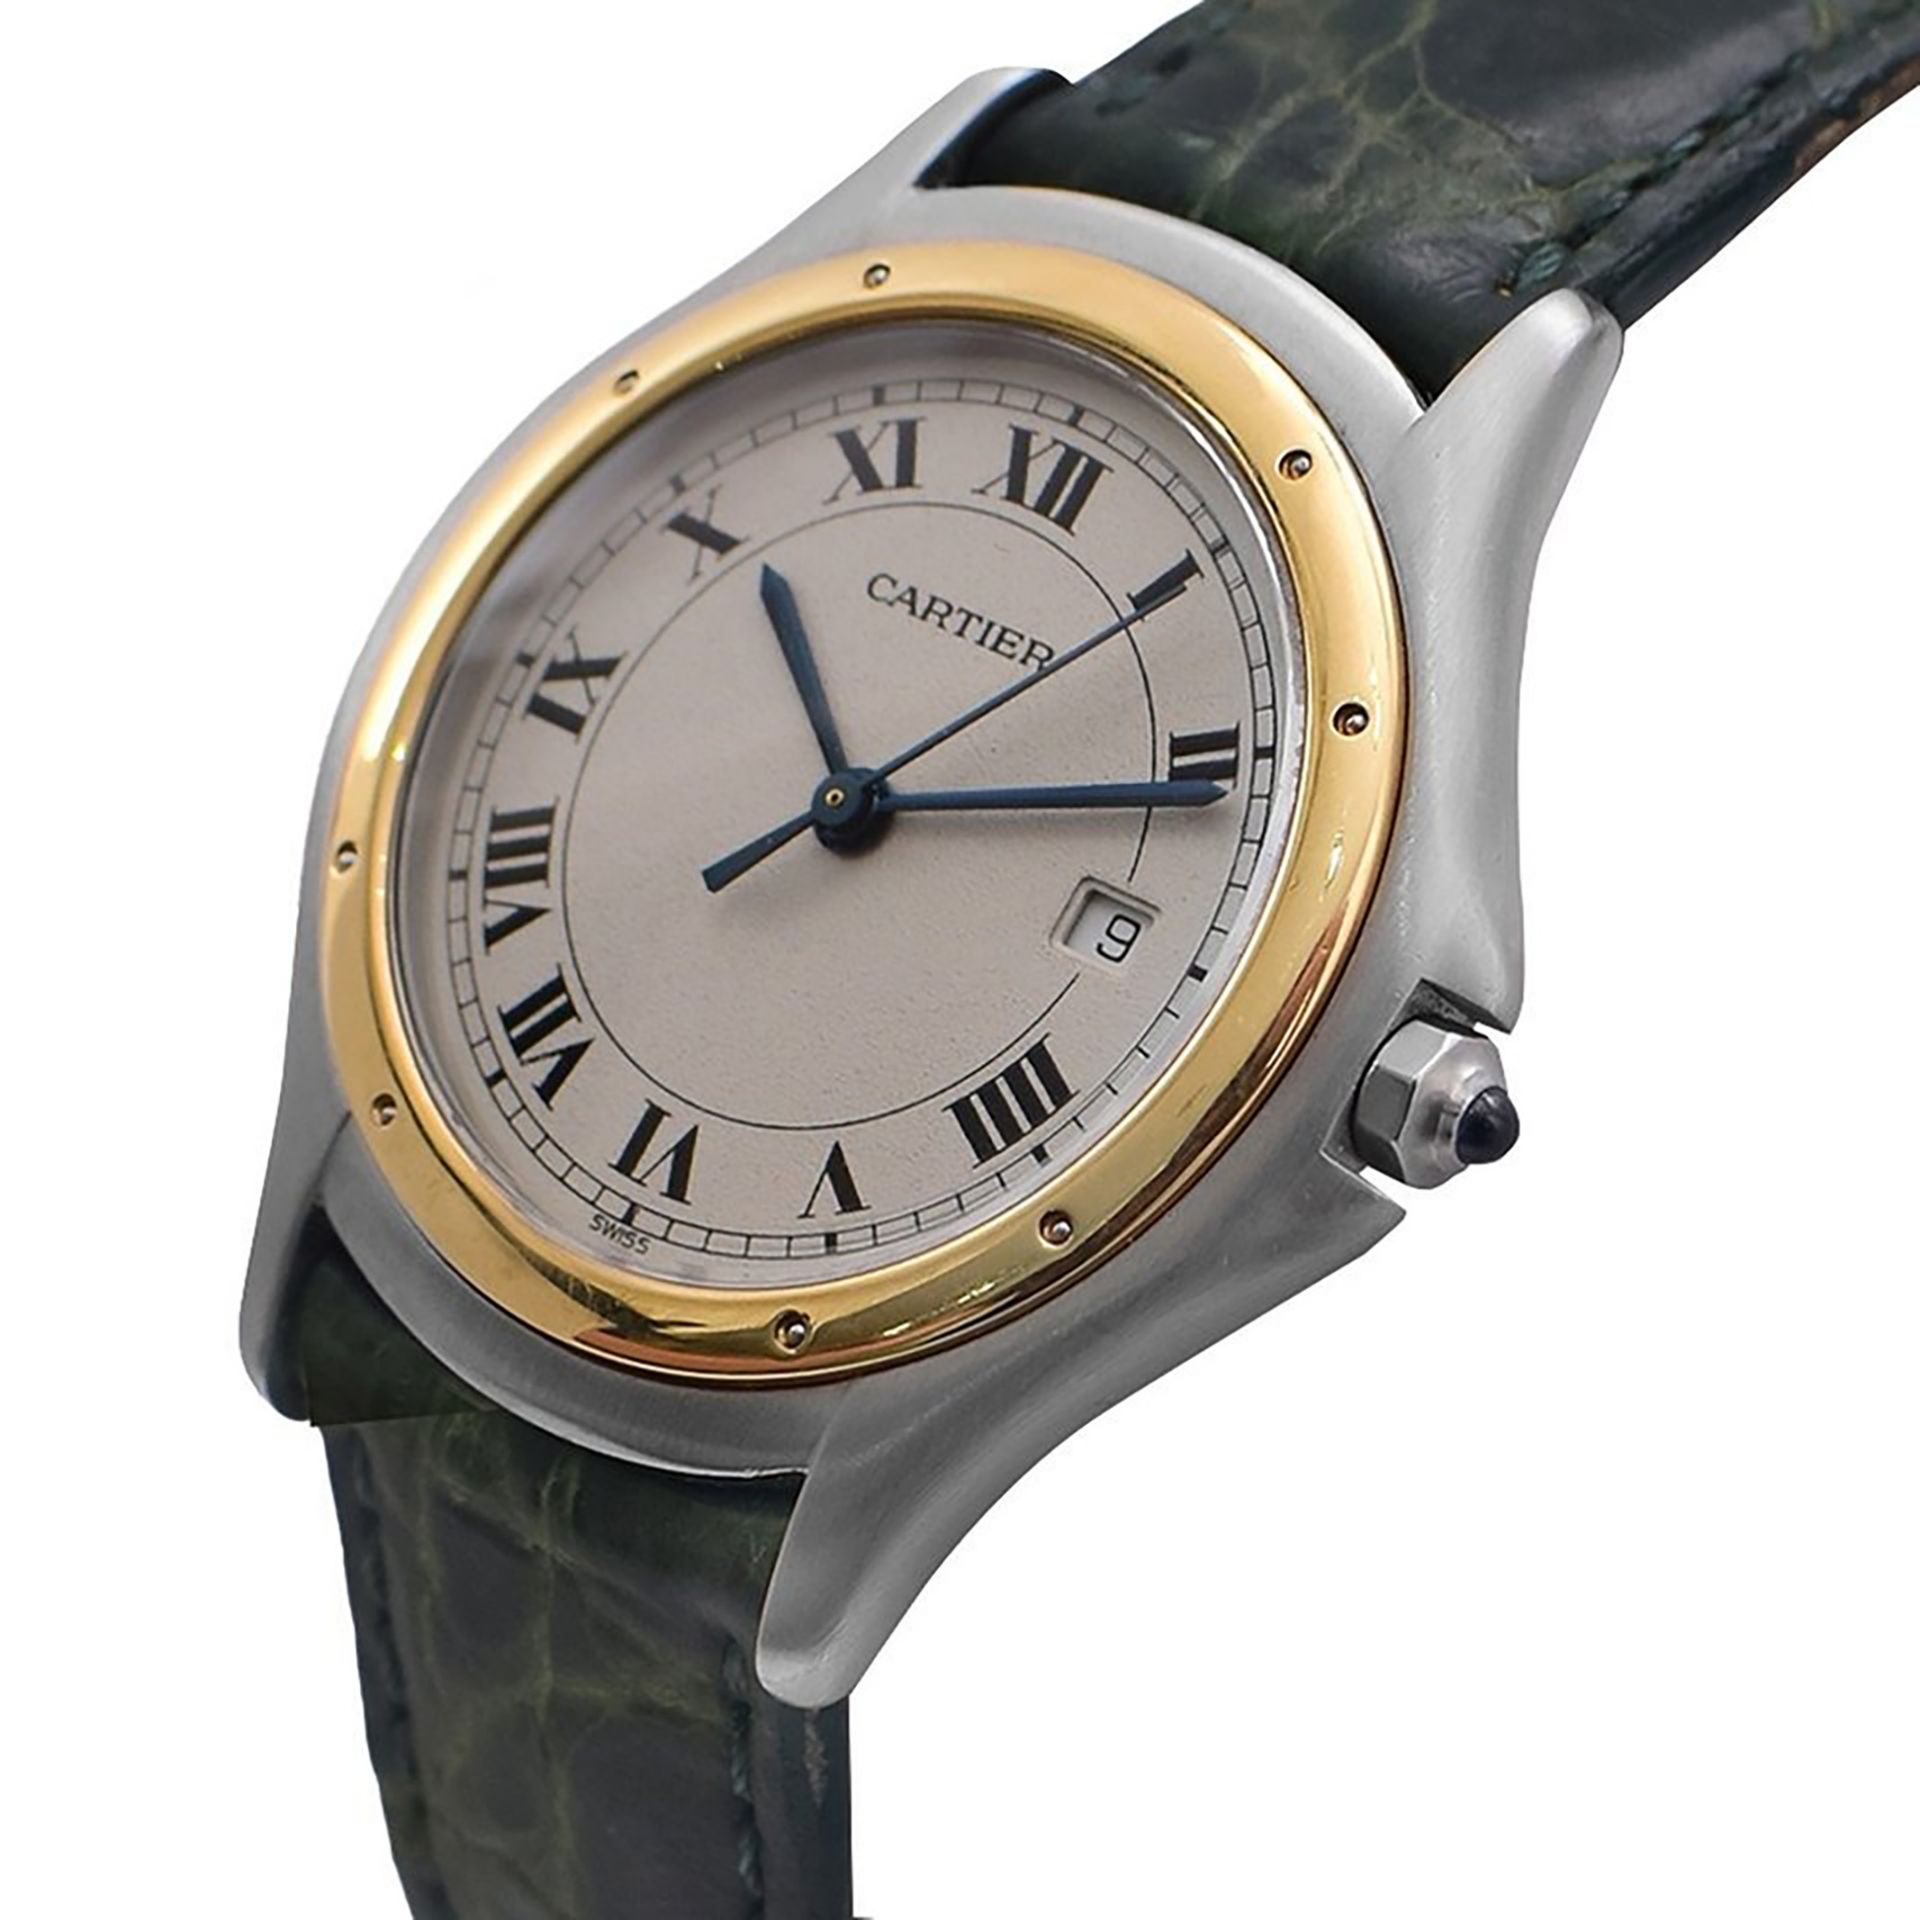 Cartier Cougar Wristwatch Model 187904 - Image 2 of 5